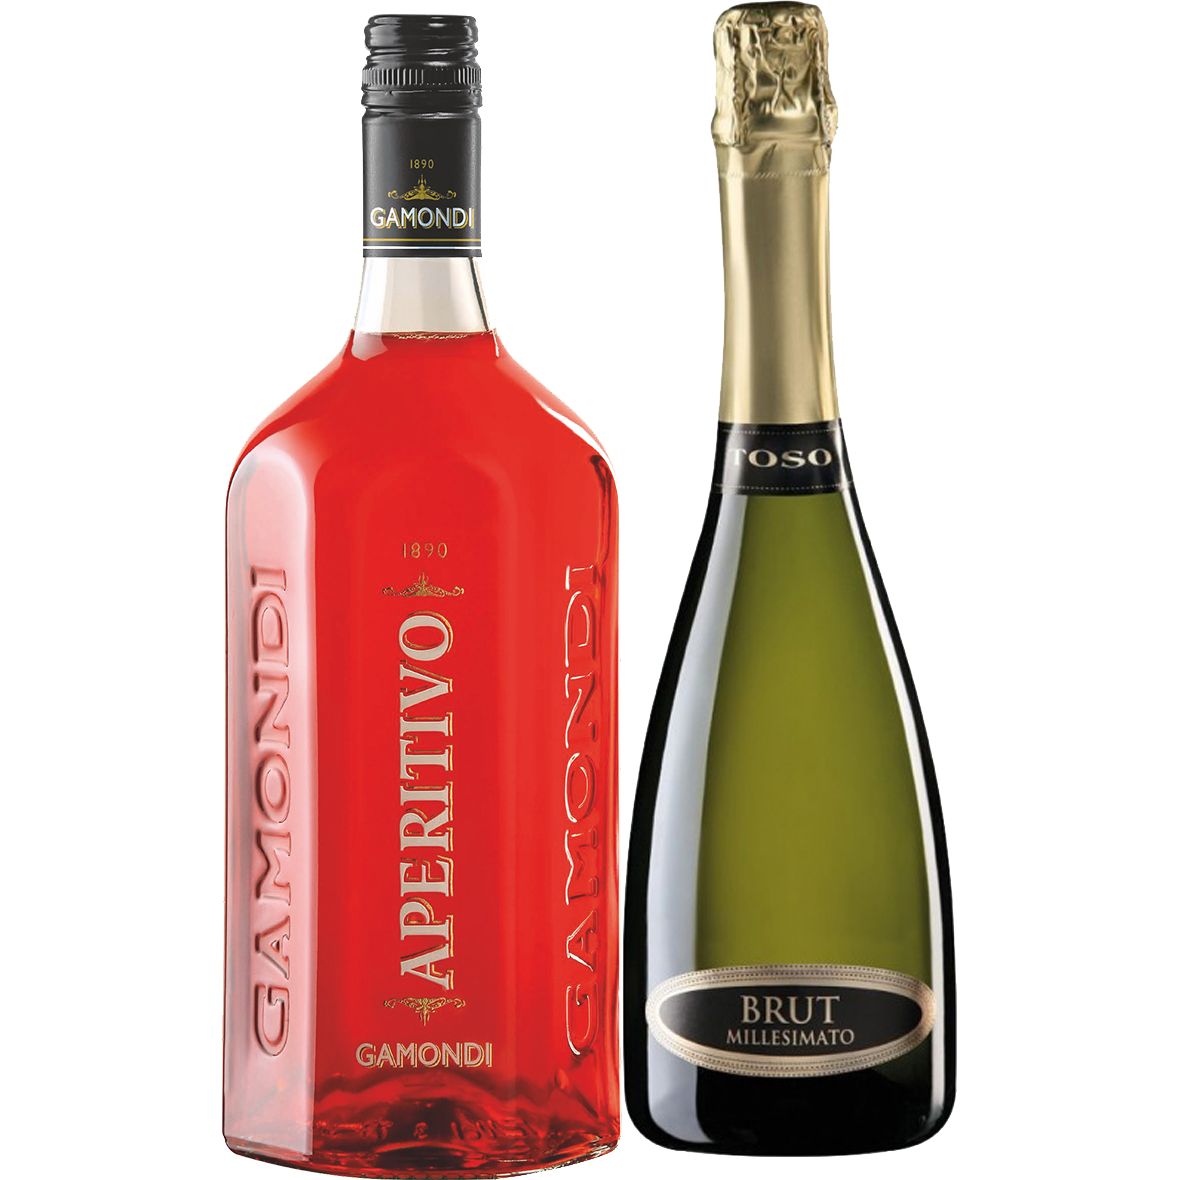 Набор Gamondi Spritz: Ликер Gamondi Aperitivo, 13,5%, 1 л + Игристое вино Toso Brut Millesimato, 0,75 л, в подарочной упаковке - фото 2